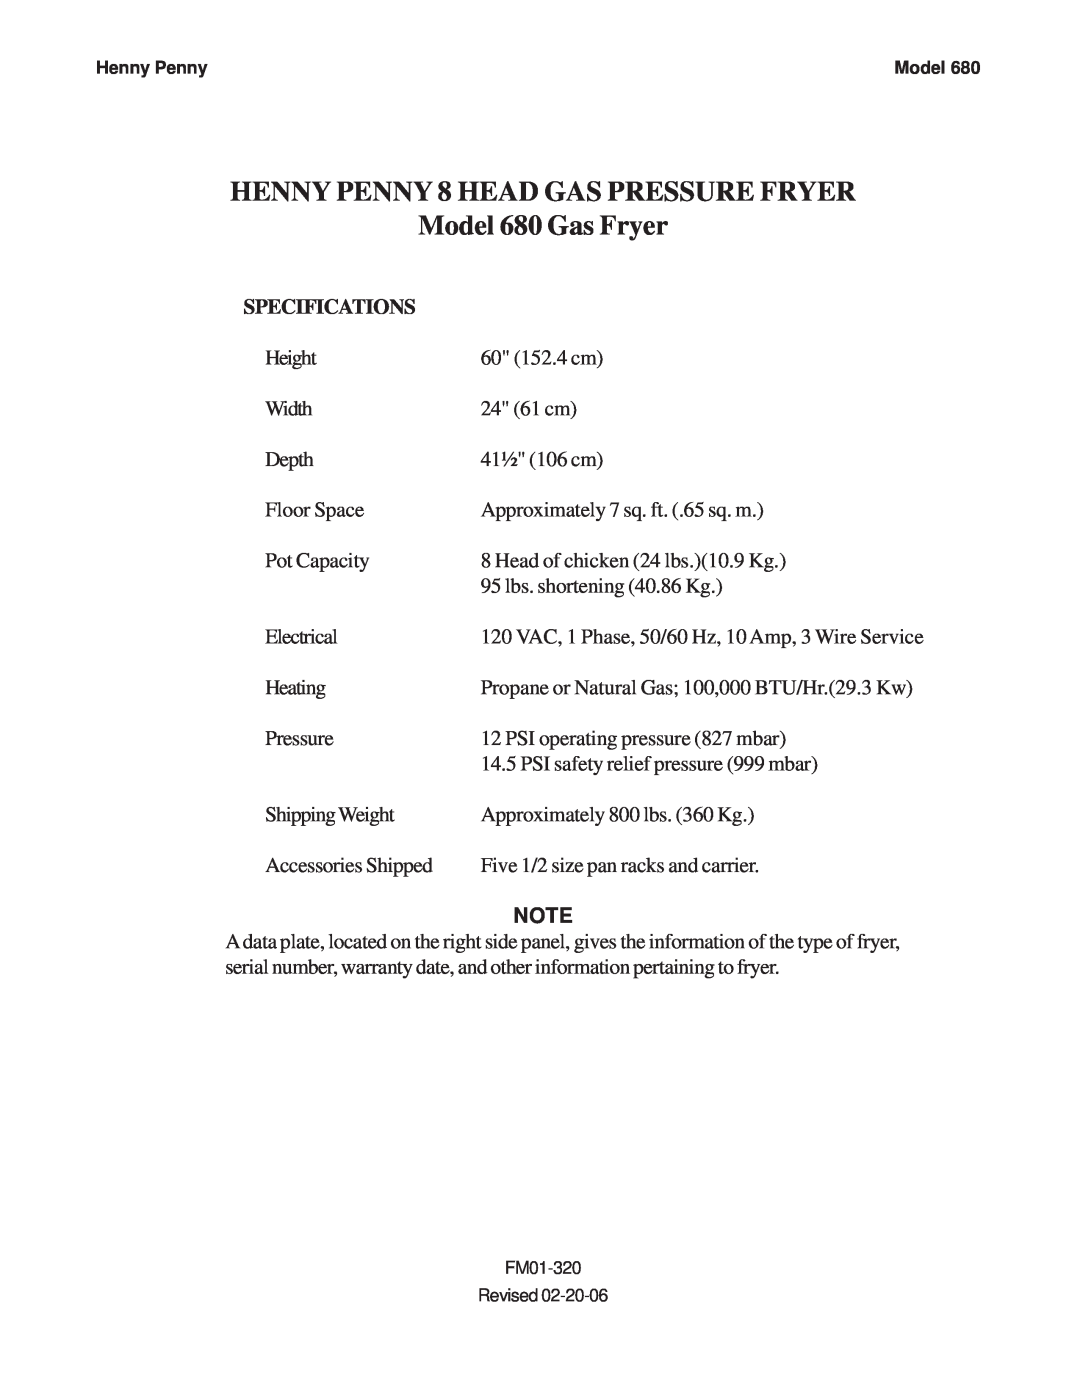 Henny Penny 680 KFC manual Specifications, HENNY PENNY 8 HEAD GAS PRESSURE FRYER, Model 680 Gas Fryer 